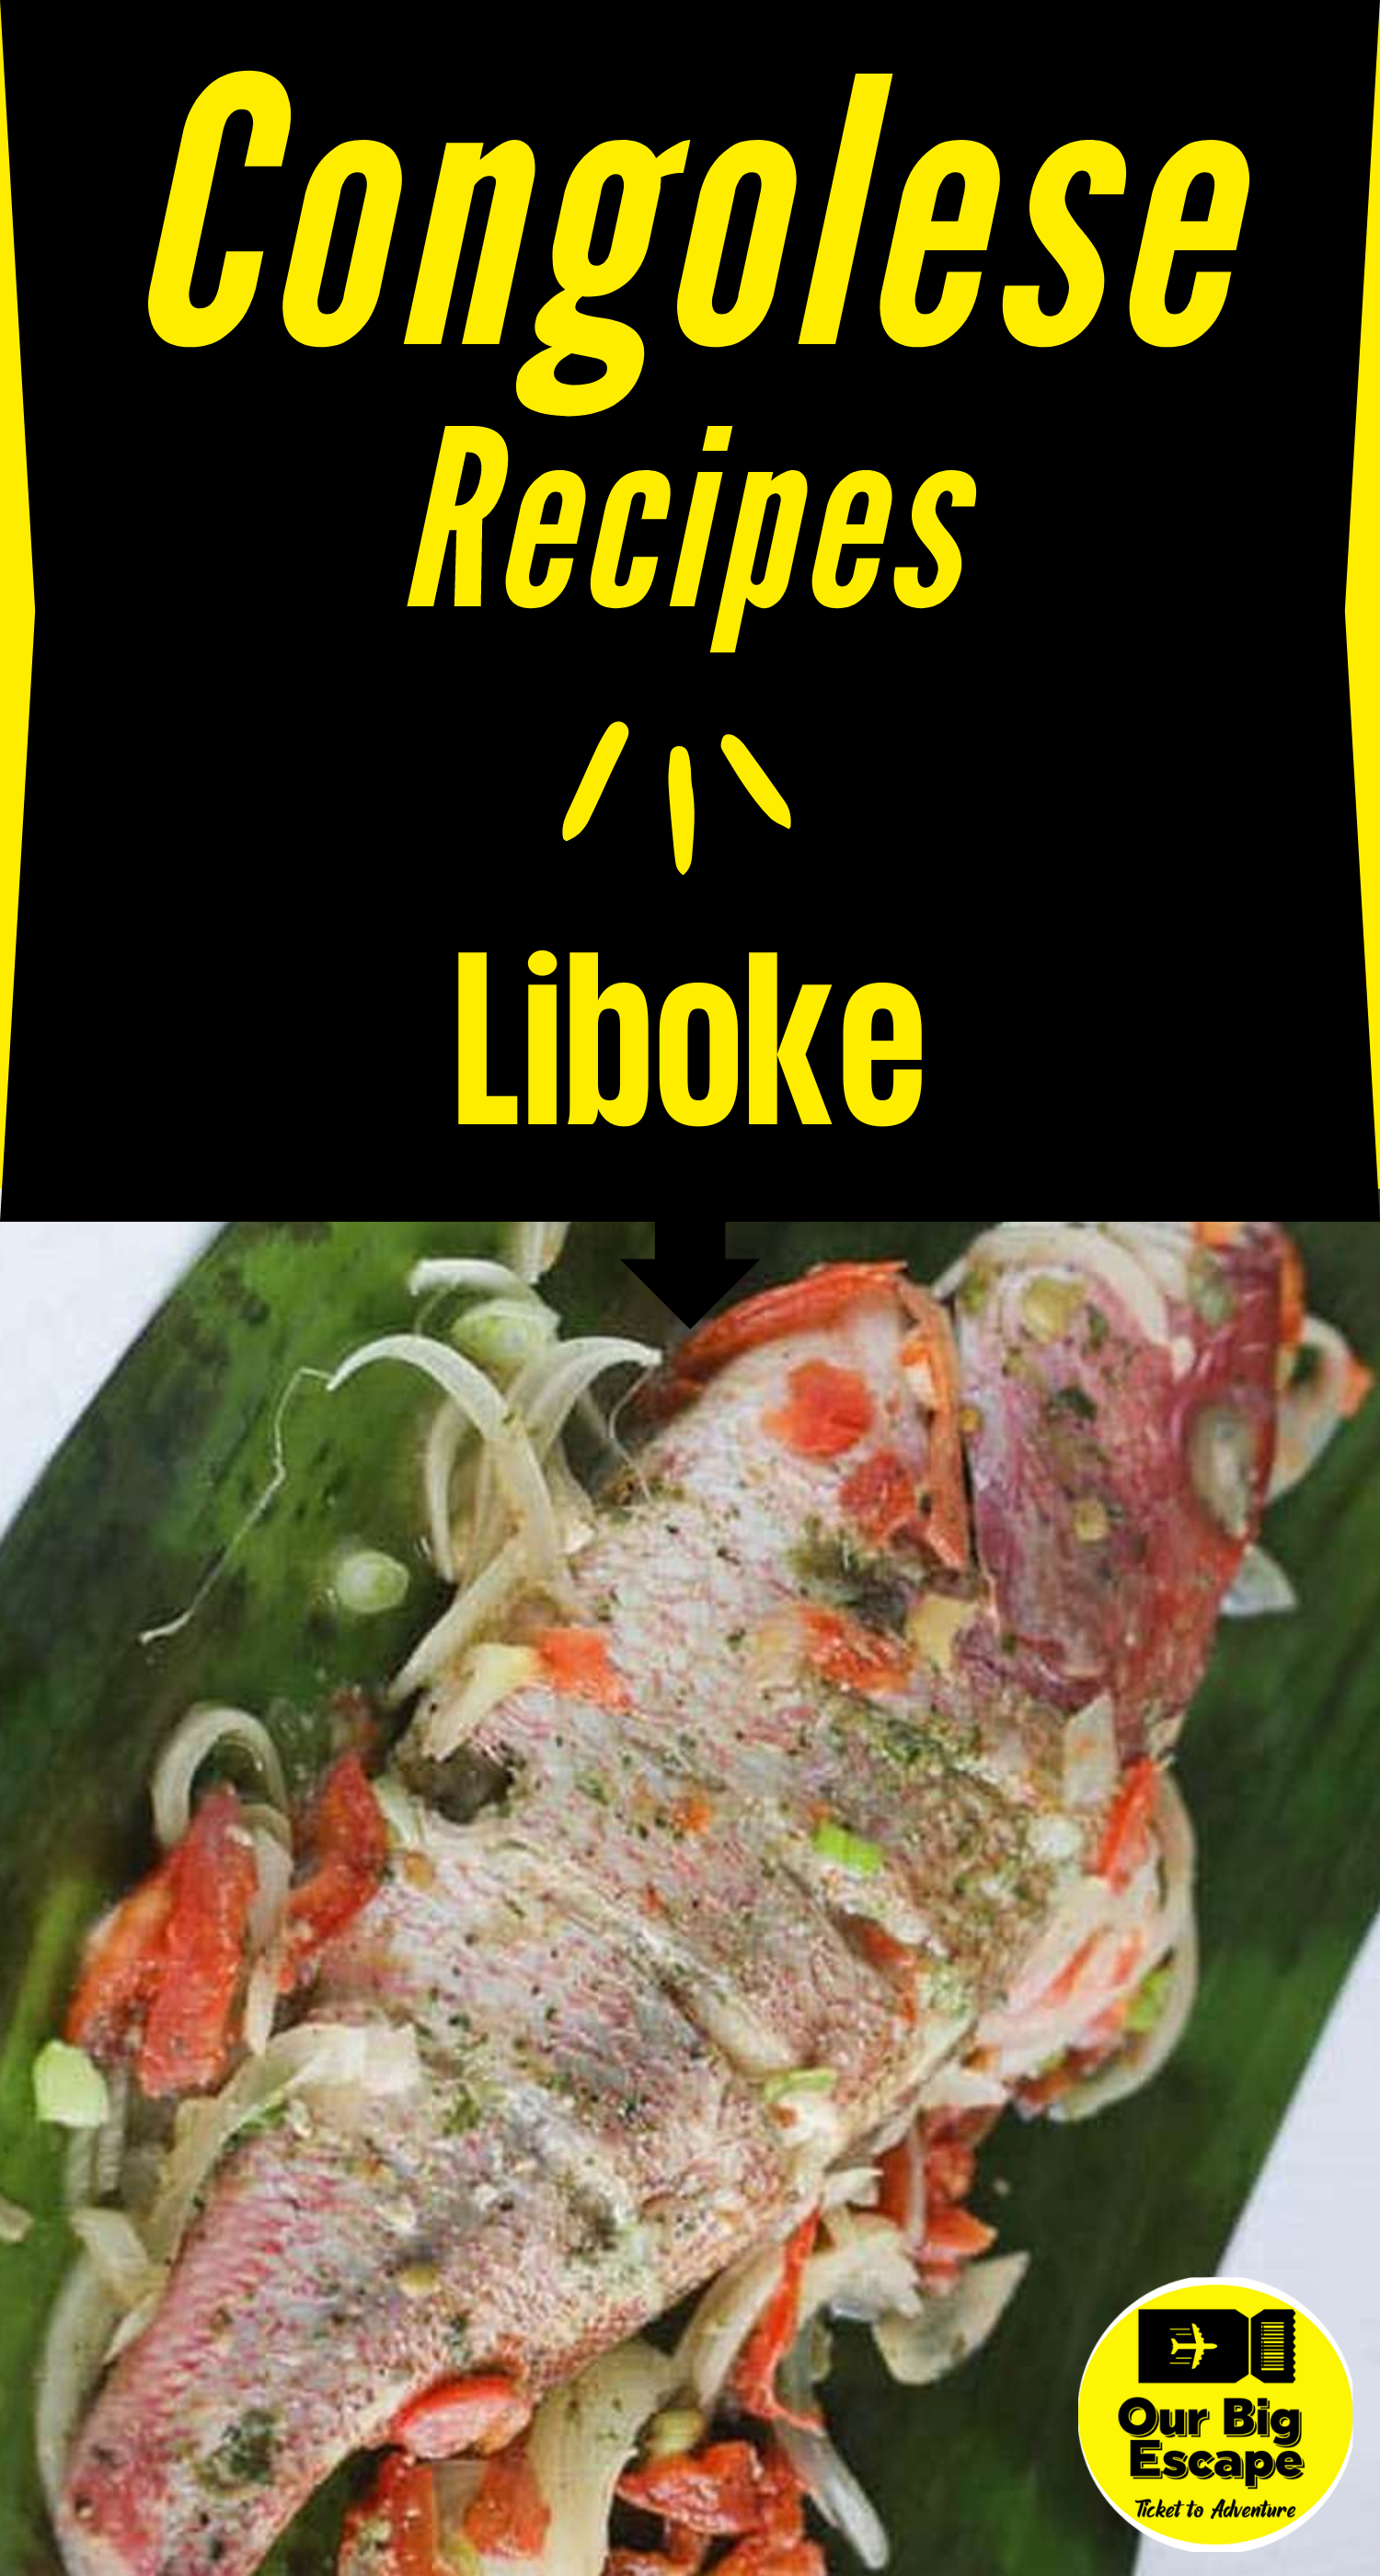 Congolese Recipes - Liboke